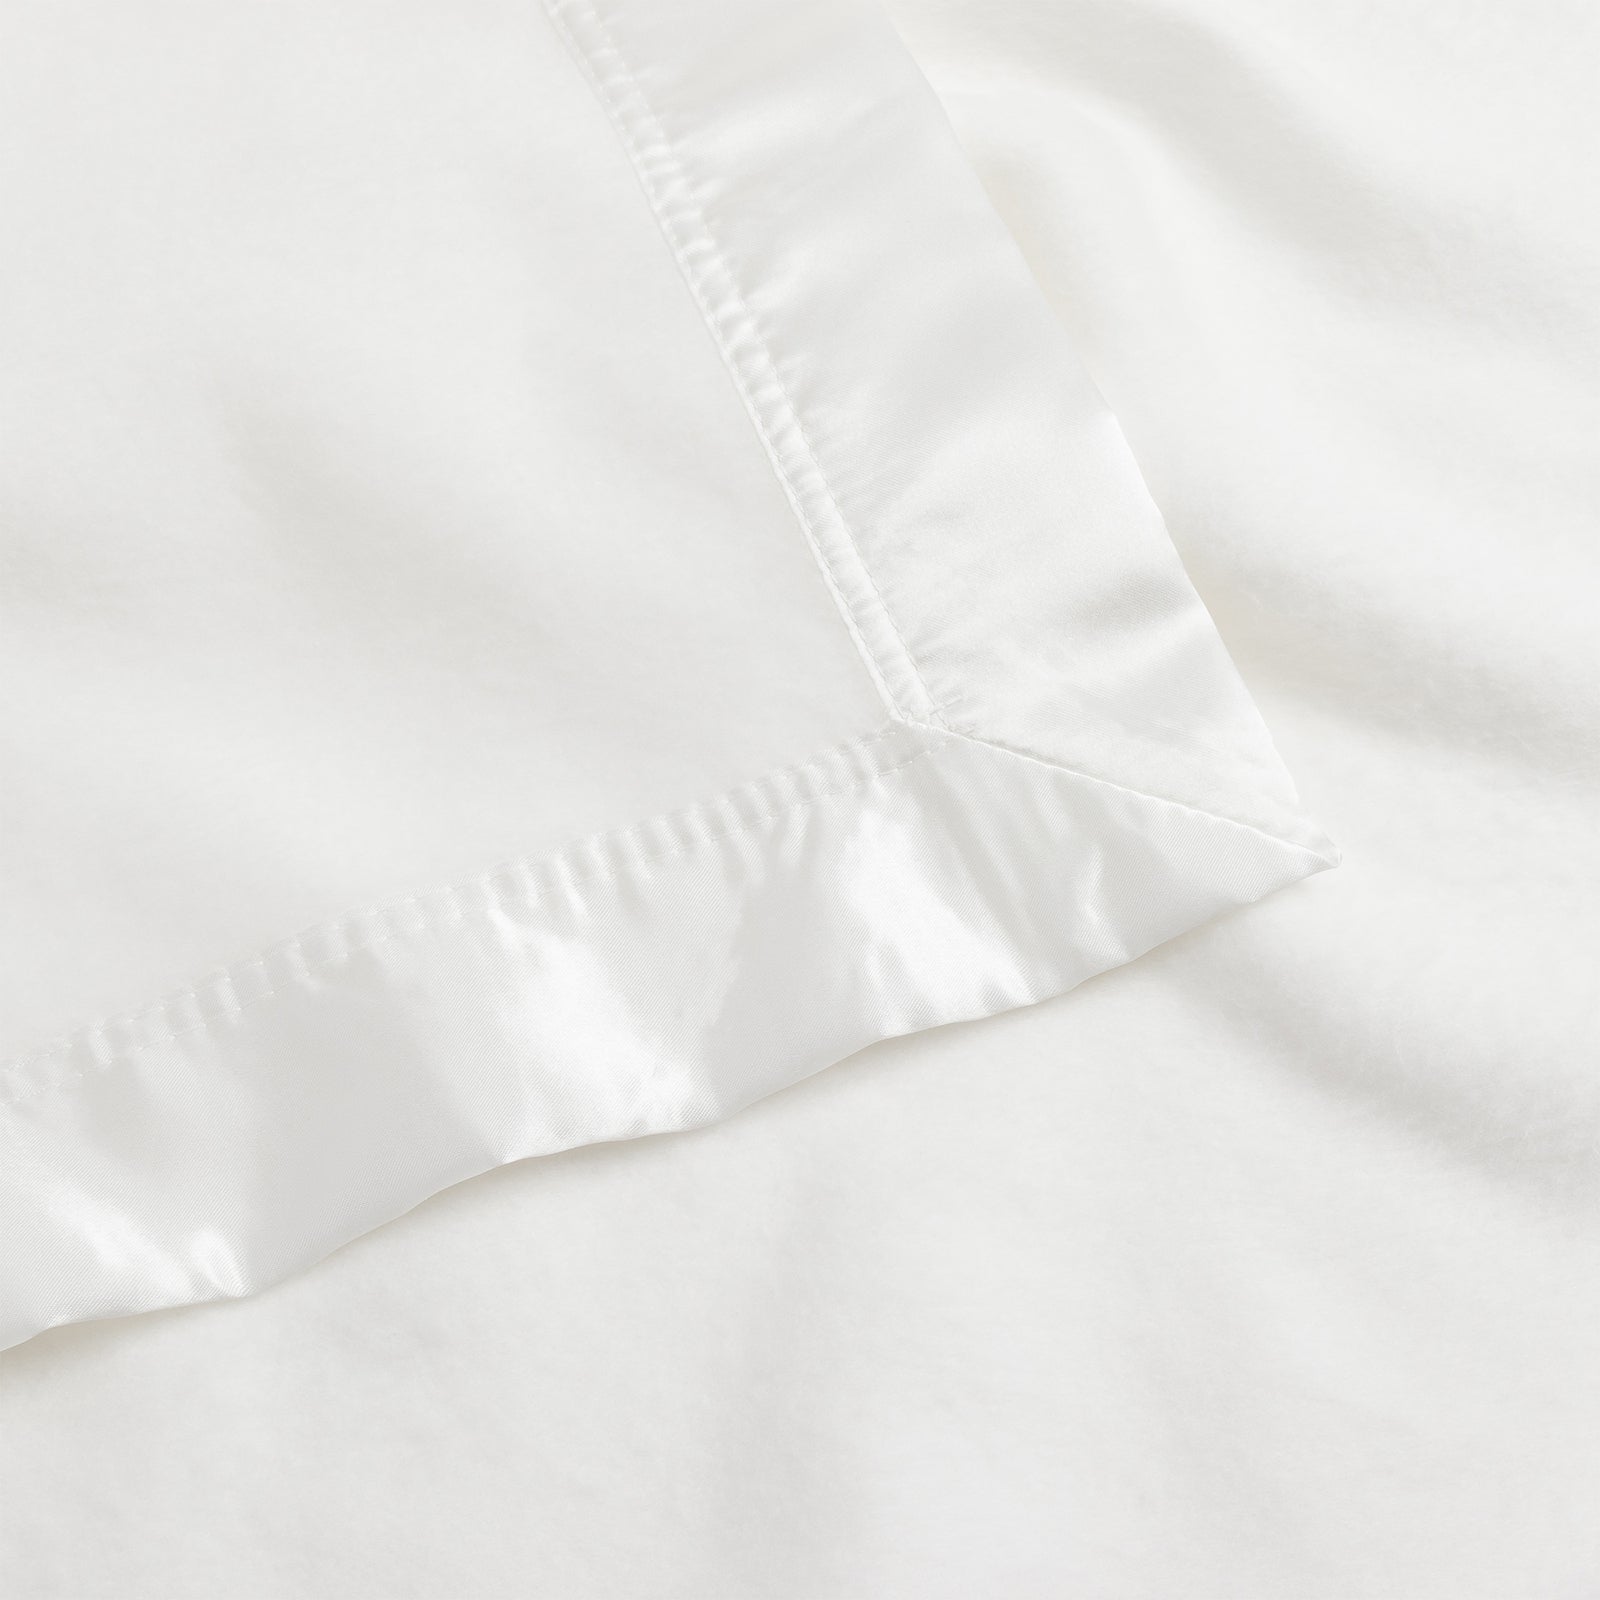 Close of up corner of white baby blanket